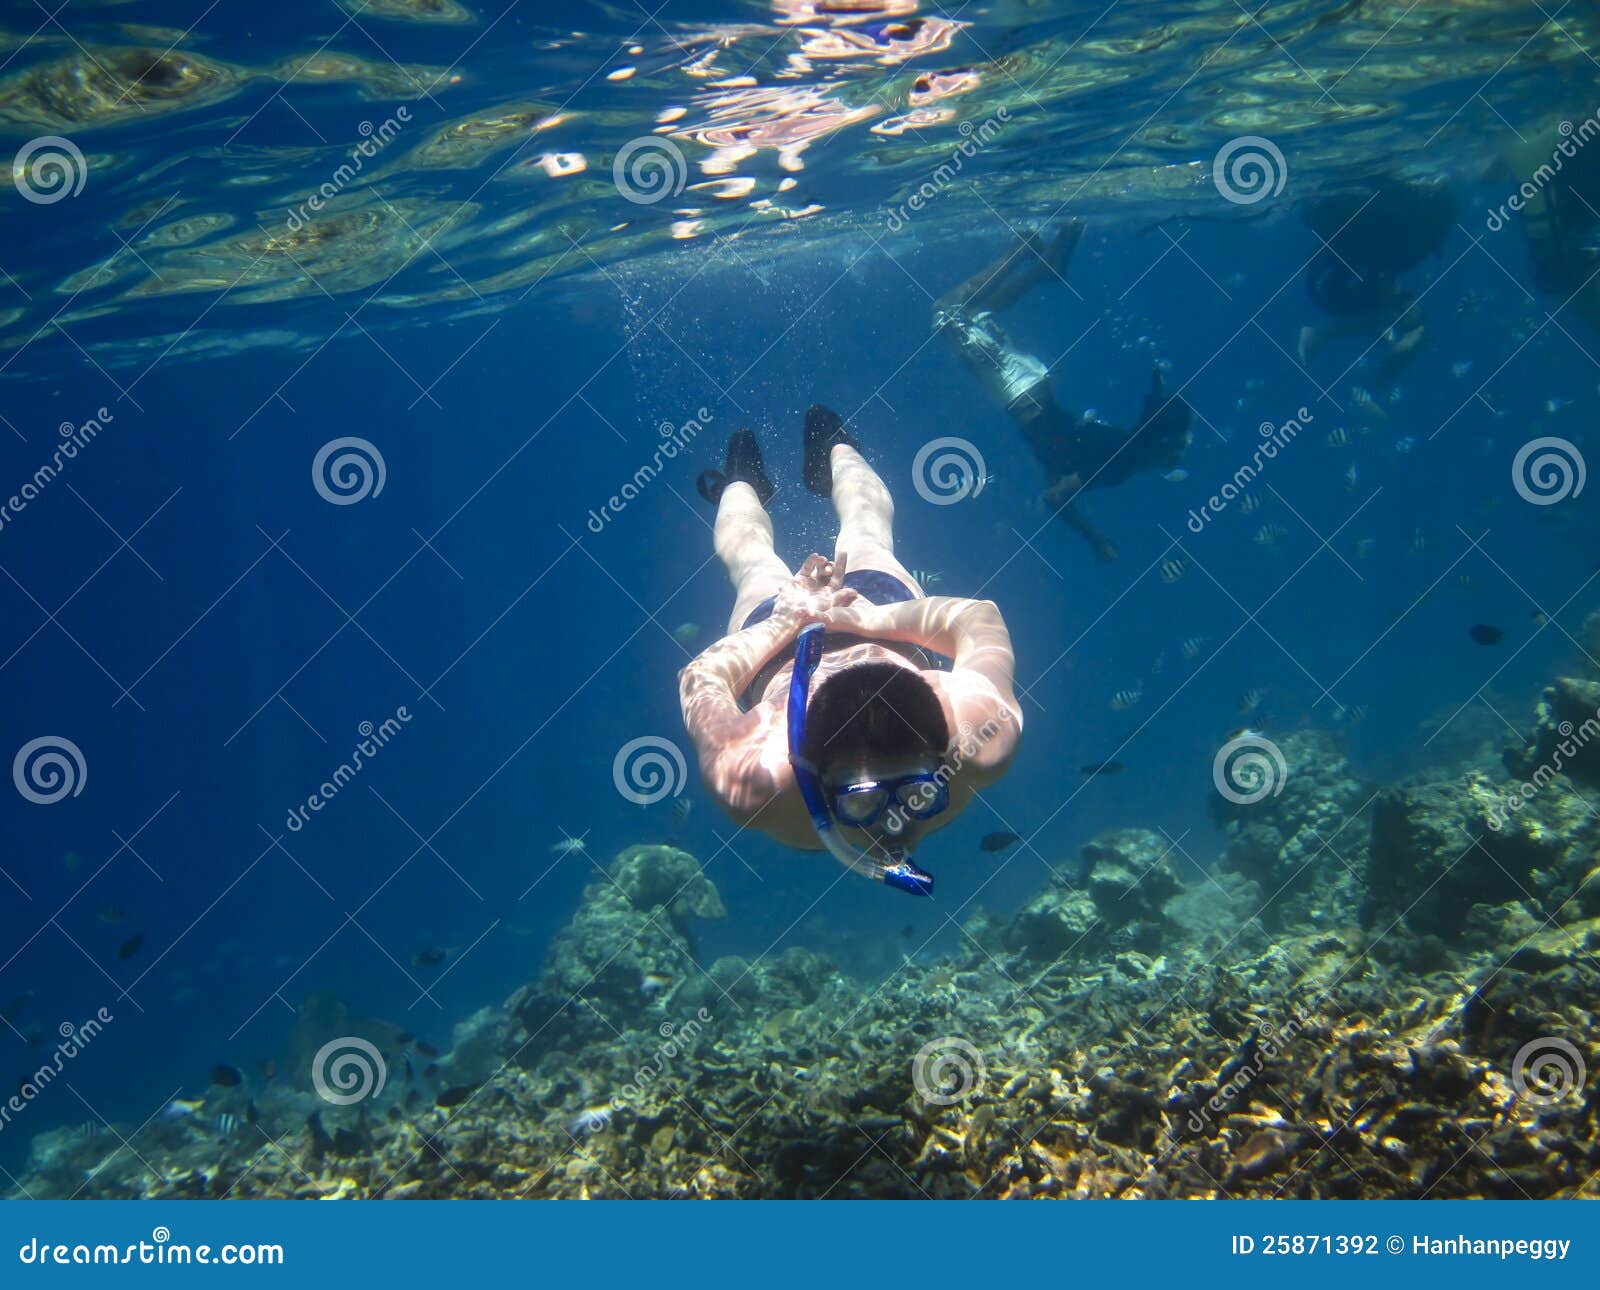 Exploring underwater stock photo. Image of diving, animal - 25871392